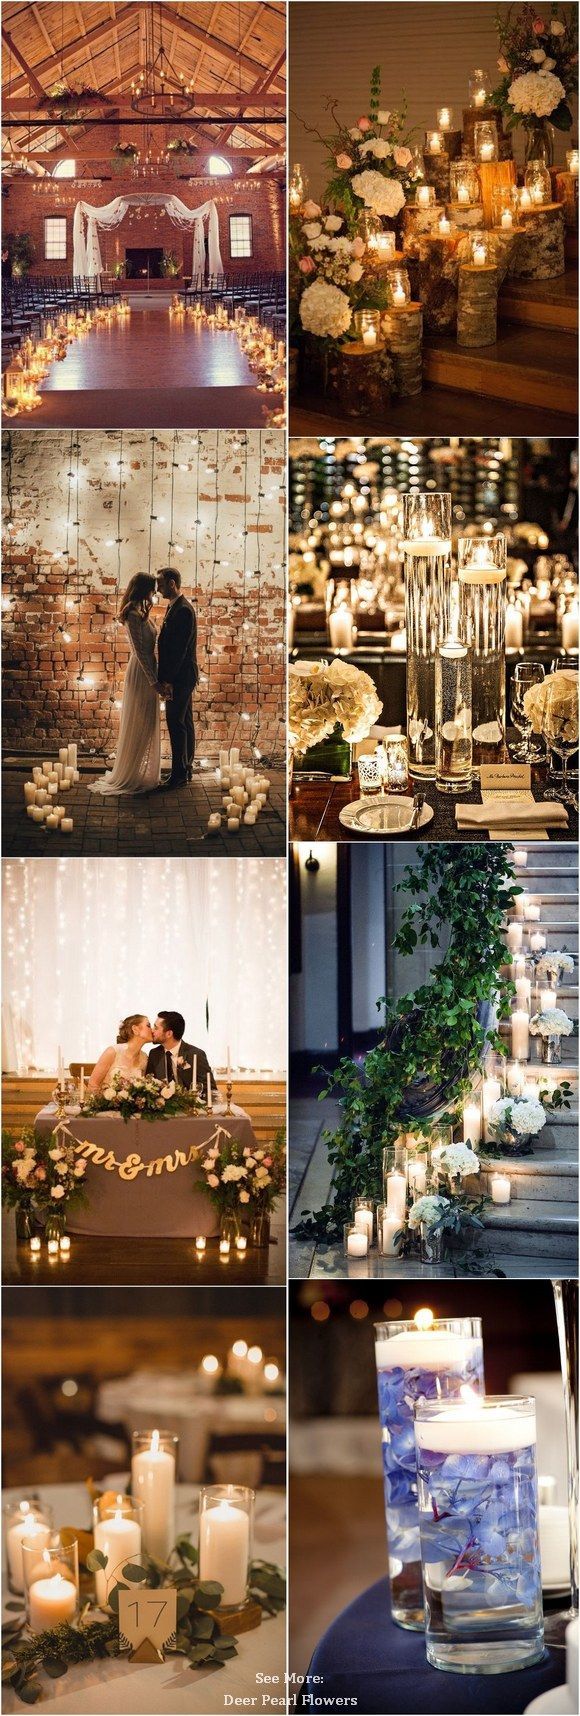 Rustic romantic wedding candle decor ideas / http://www.deerpearlflowers.com/wedding-ideas-using-candles/